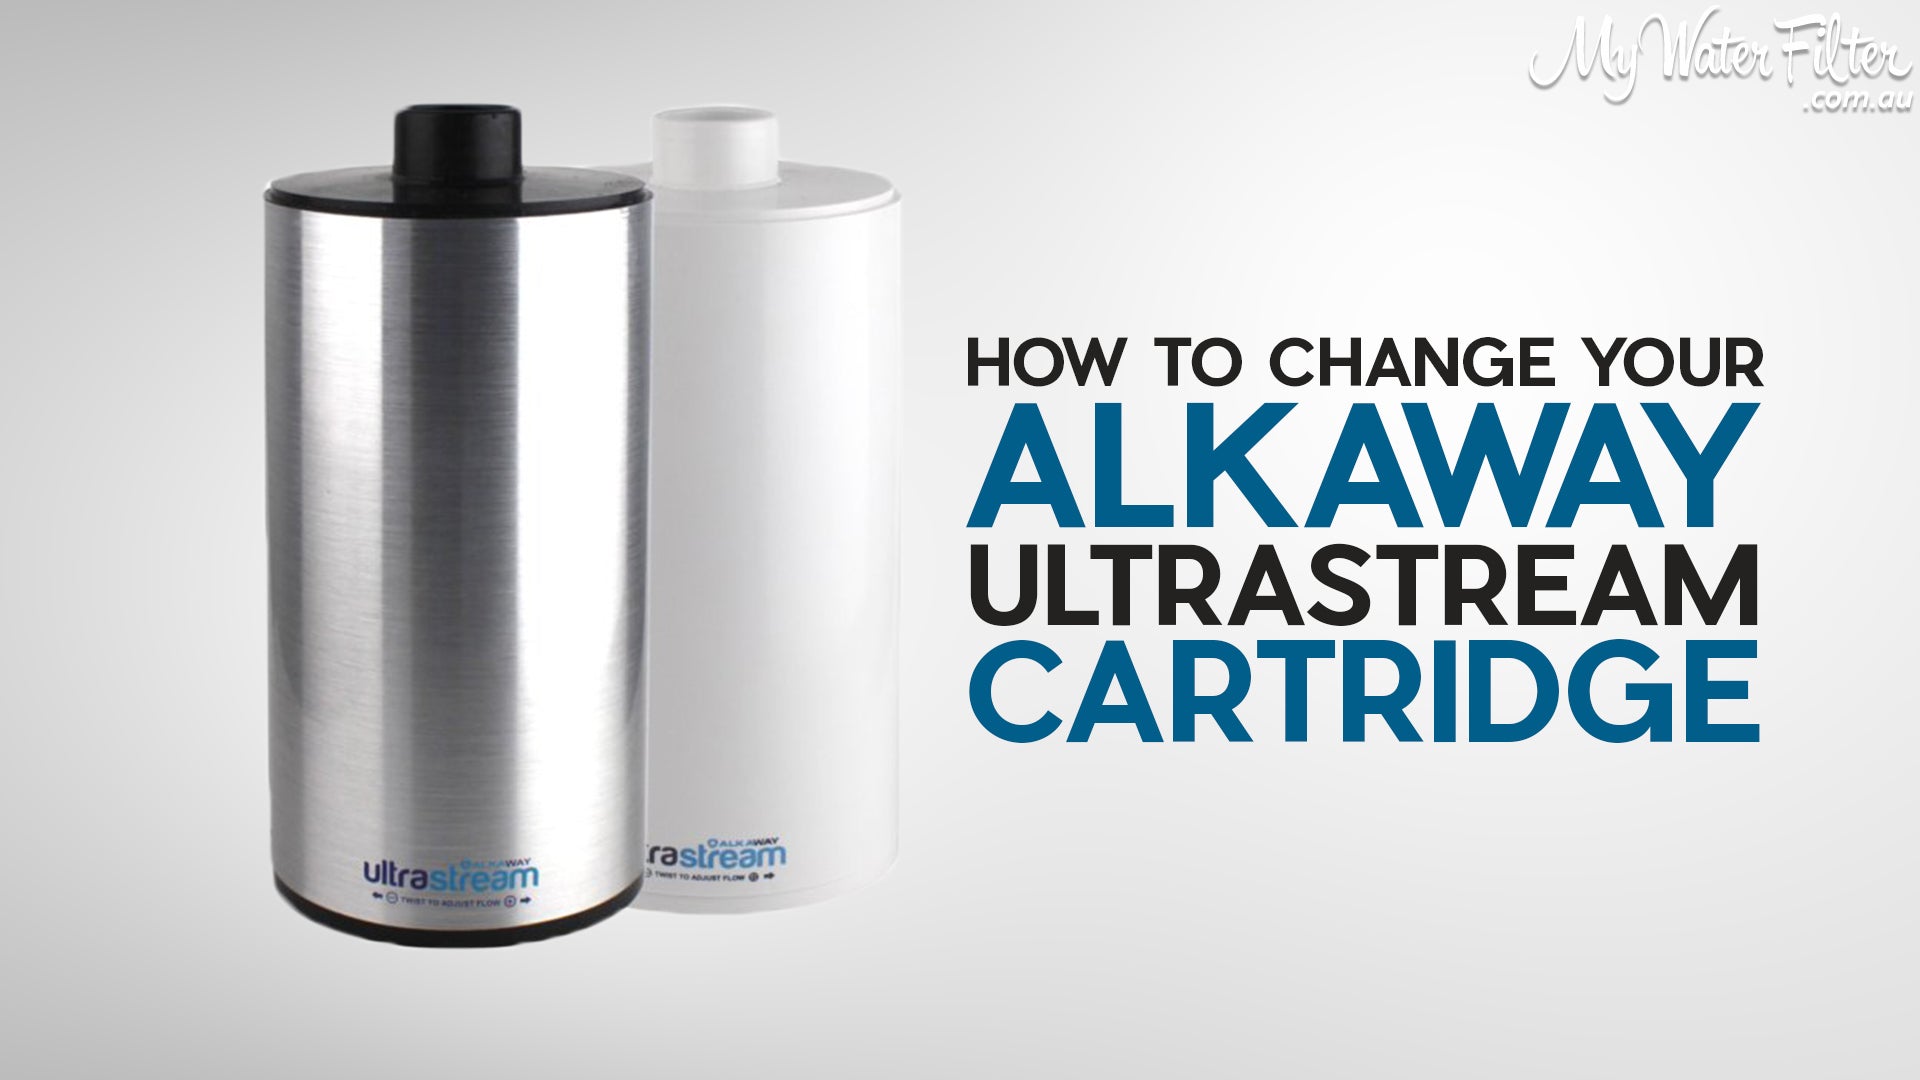 How to change the cartridge in your Alkaway Ultrastream Water Filter